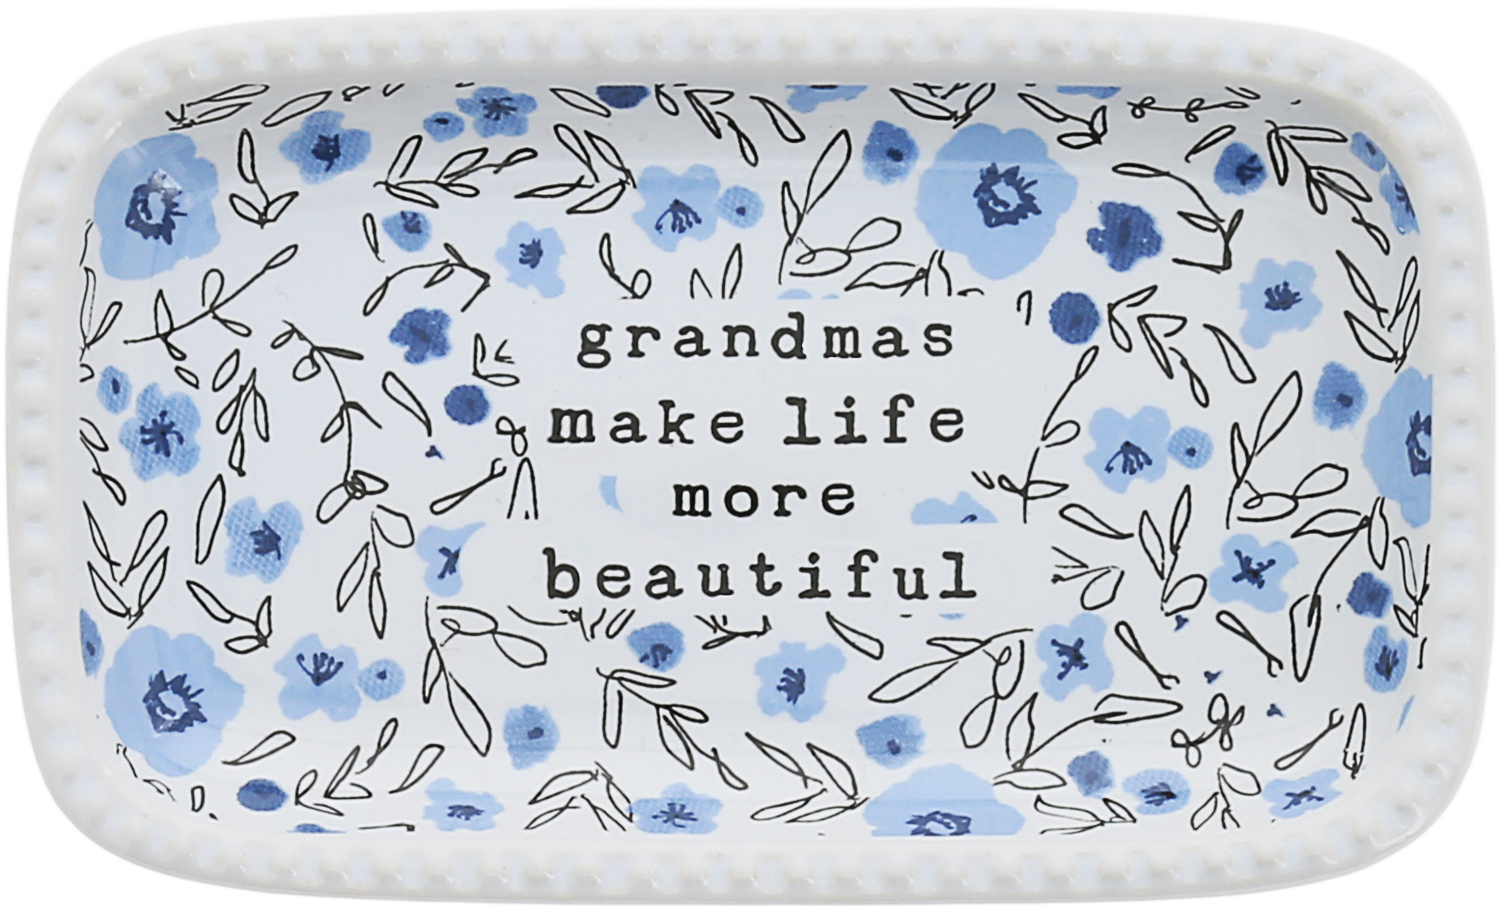 Grandma by You Make Me Smile -ALW - Grandma - 5" x 3" Keepsake Dish